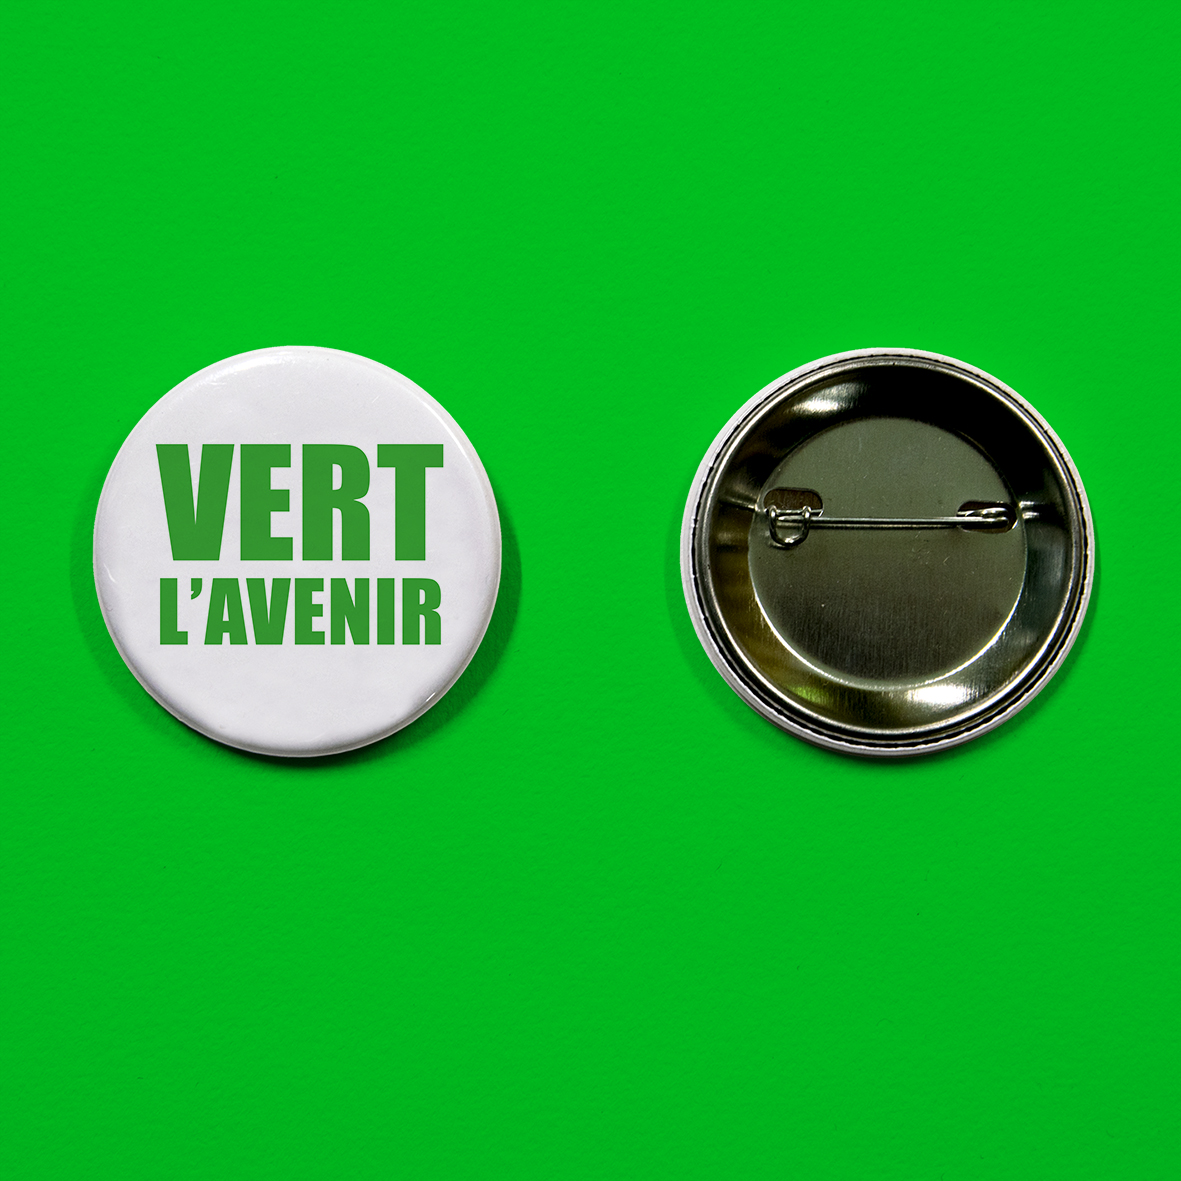 vert l'avenir ecologie badge politique manifestation diane corbin